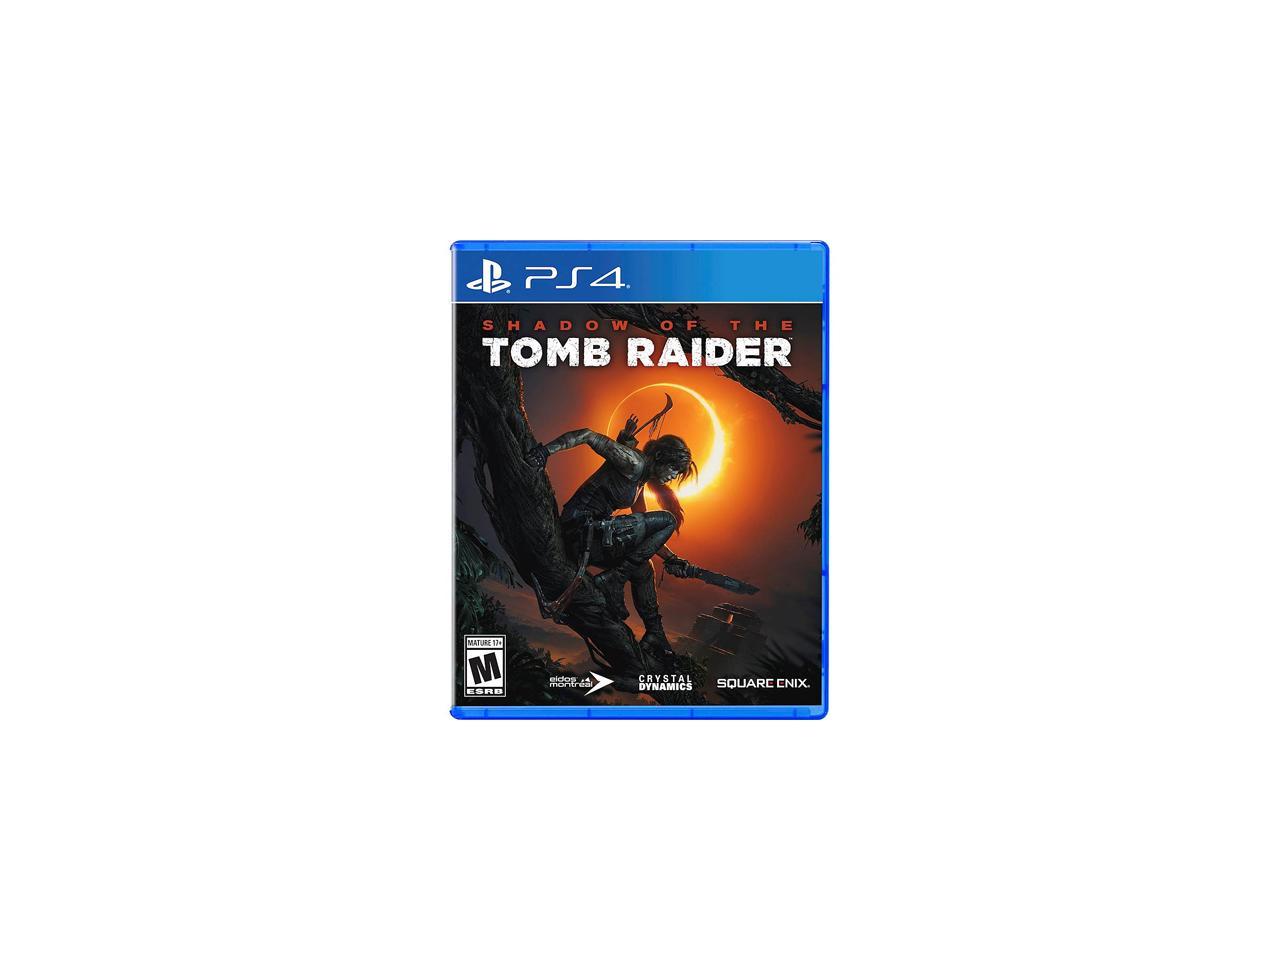 Tomb raider ps4 купить. Shadow of the Tomb Raider ps4.